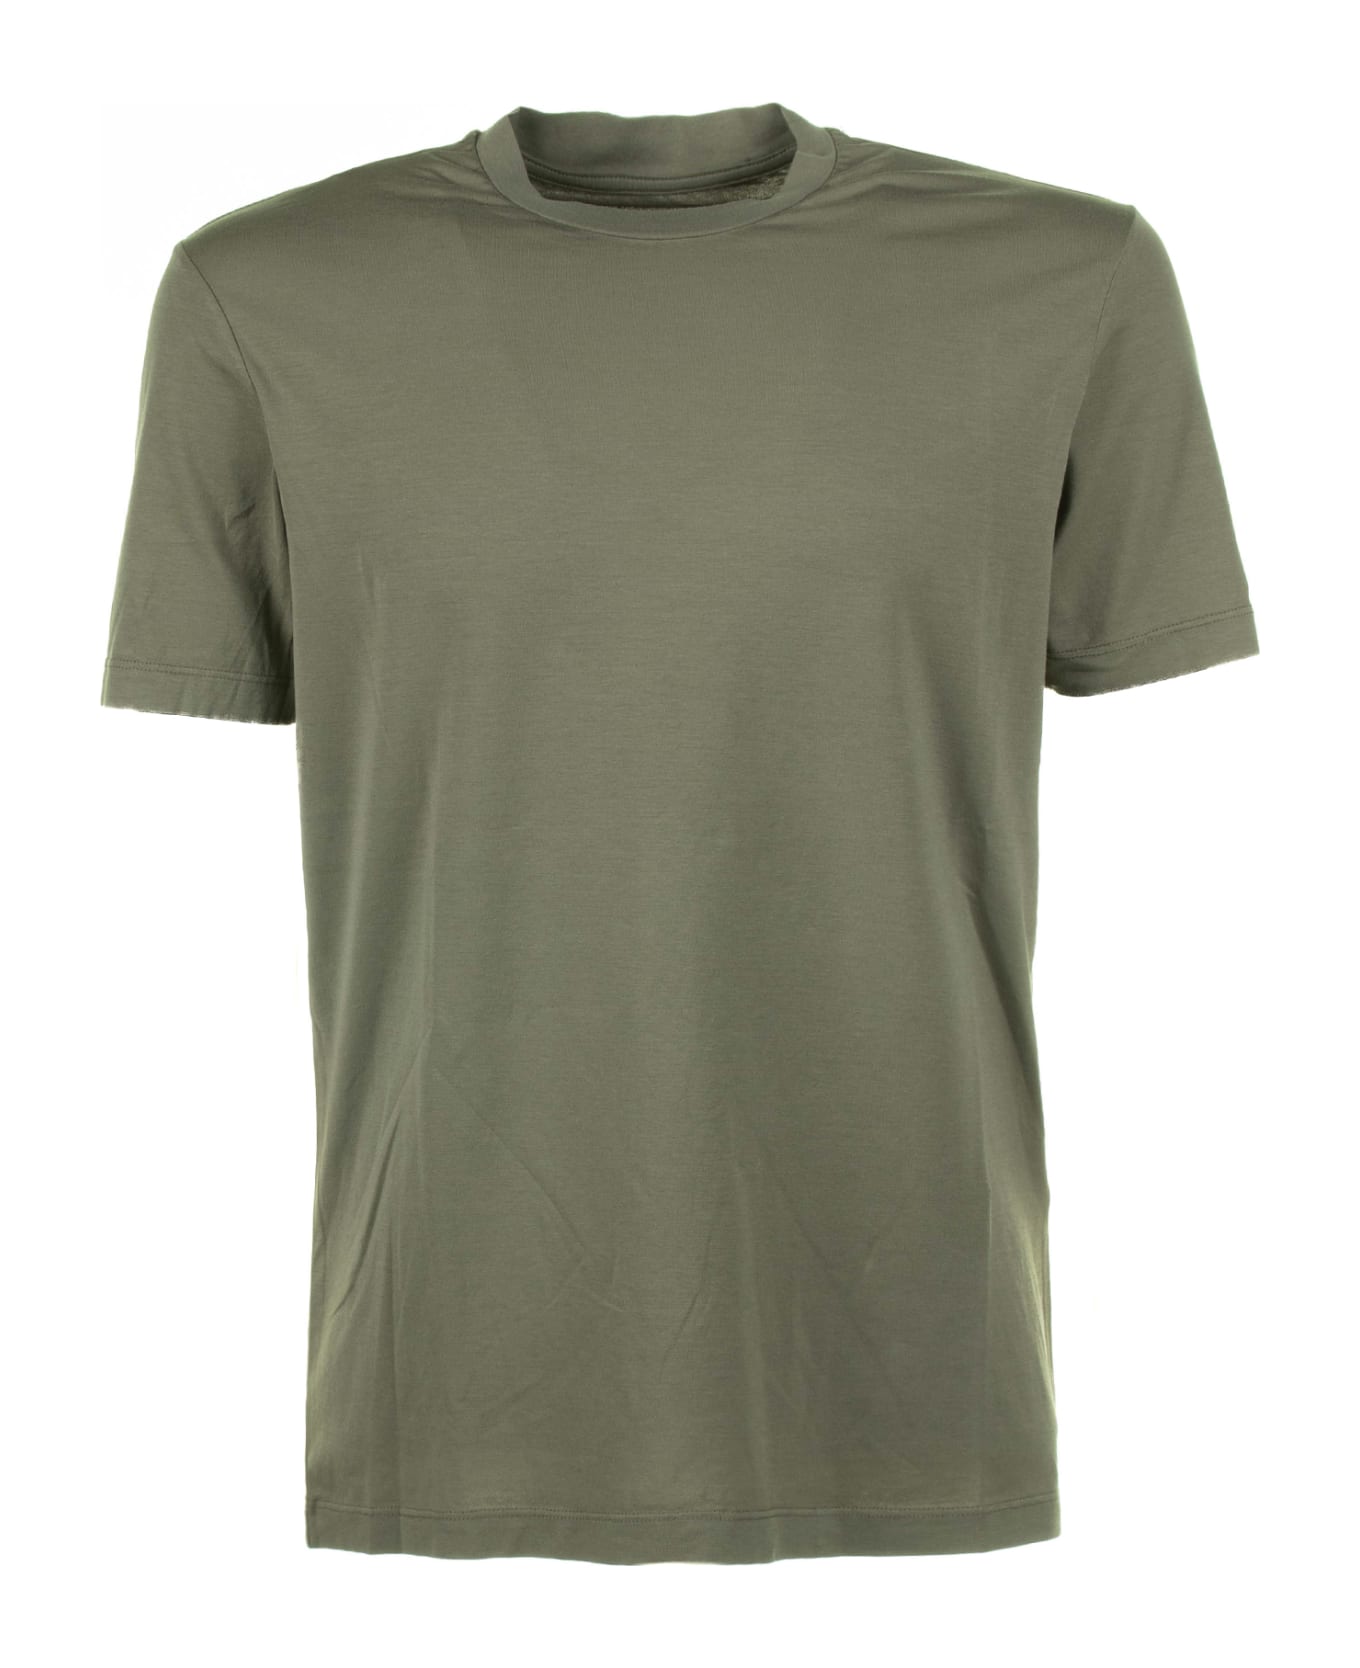 Altea Military Green Cotton T-shirt - MILITARE シャツ